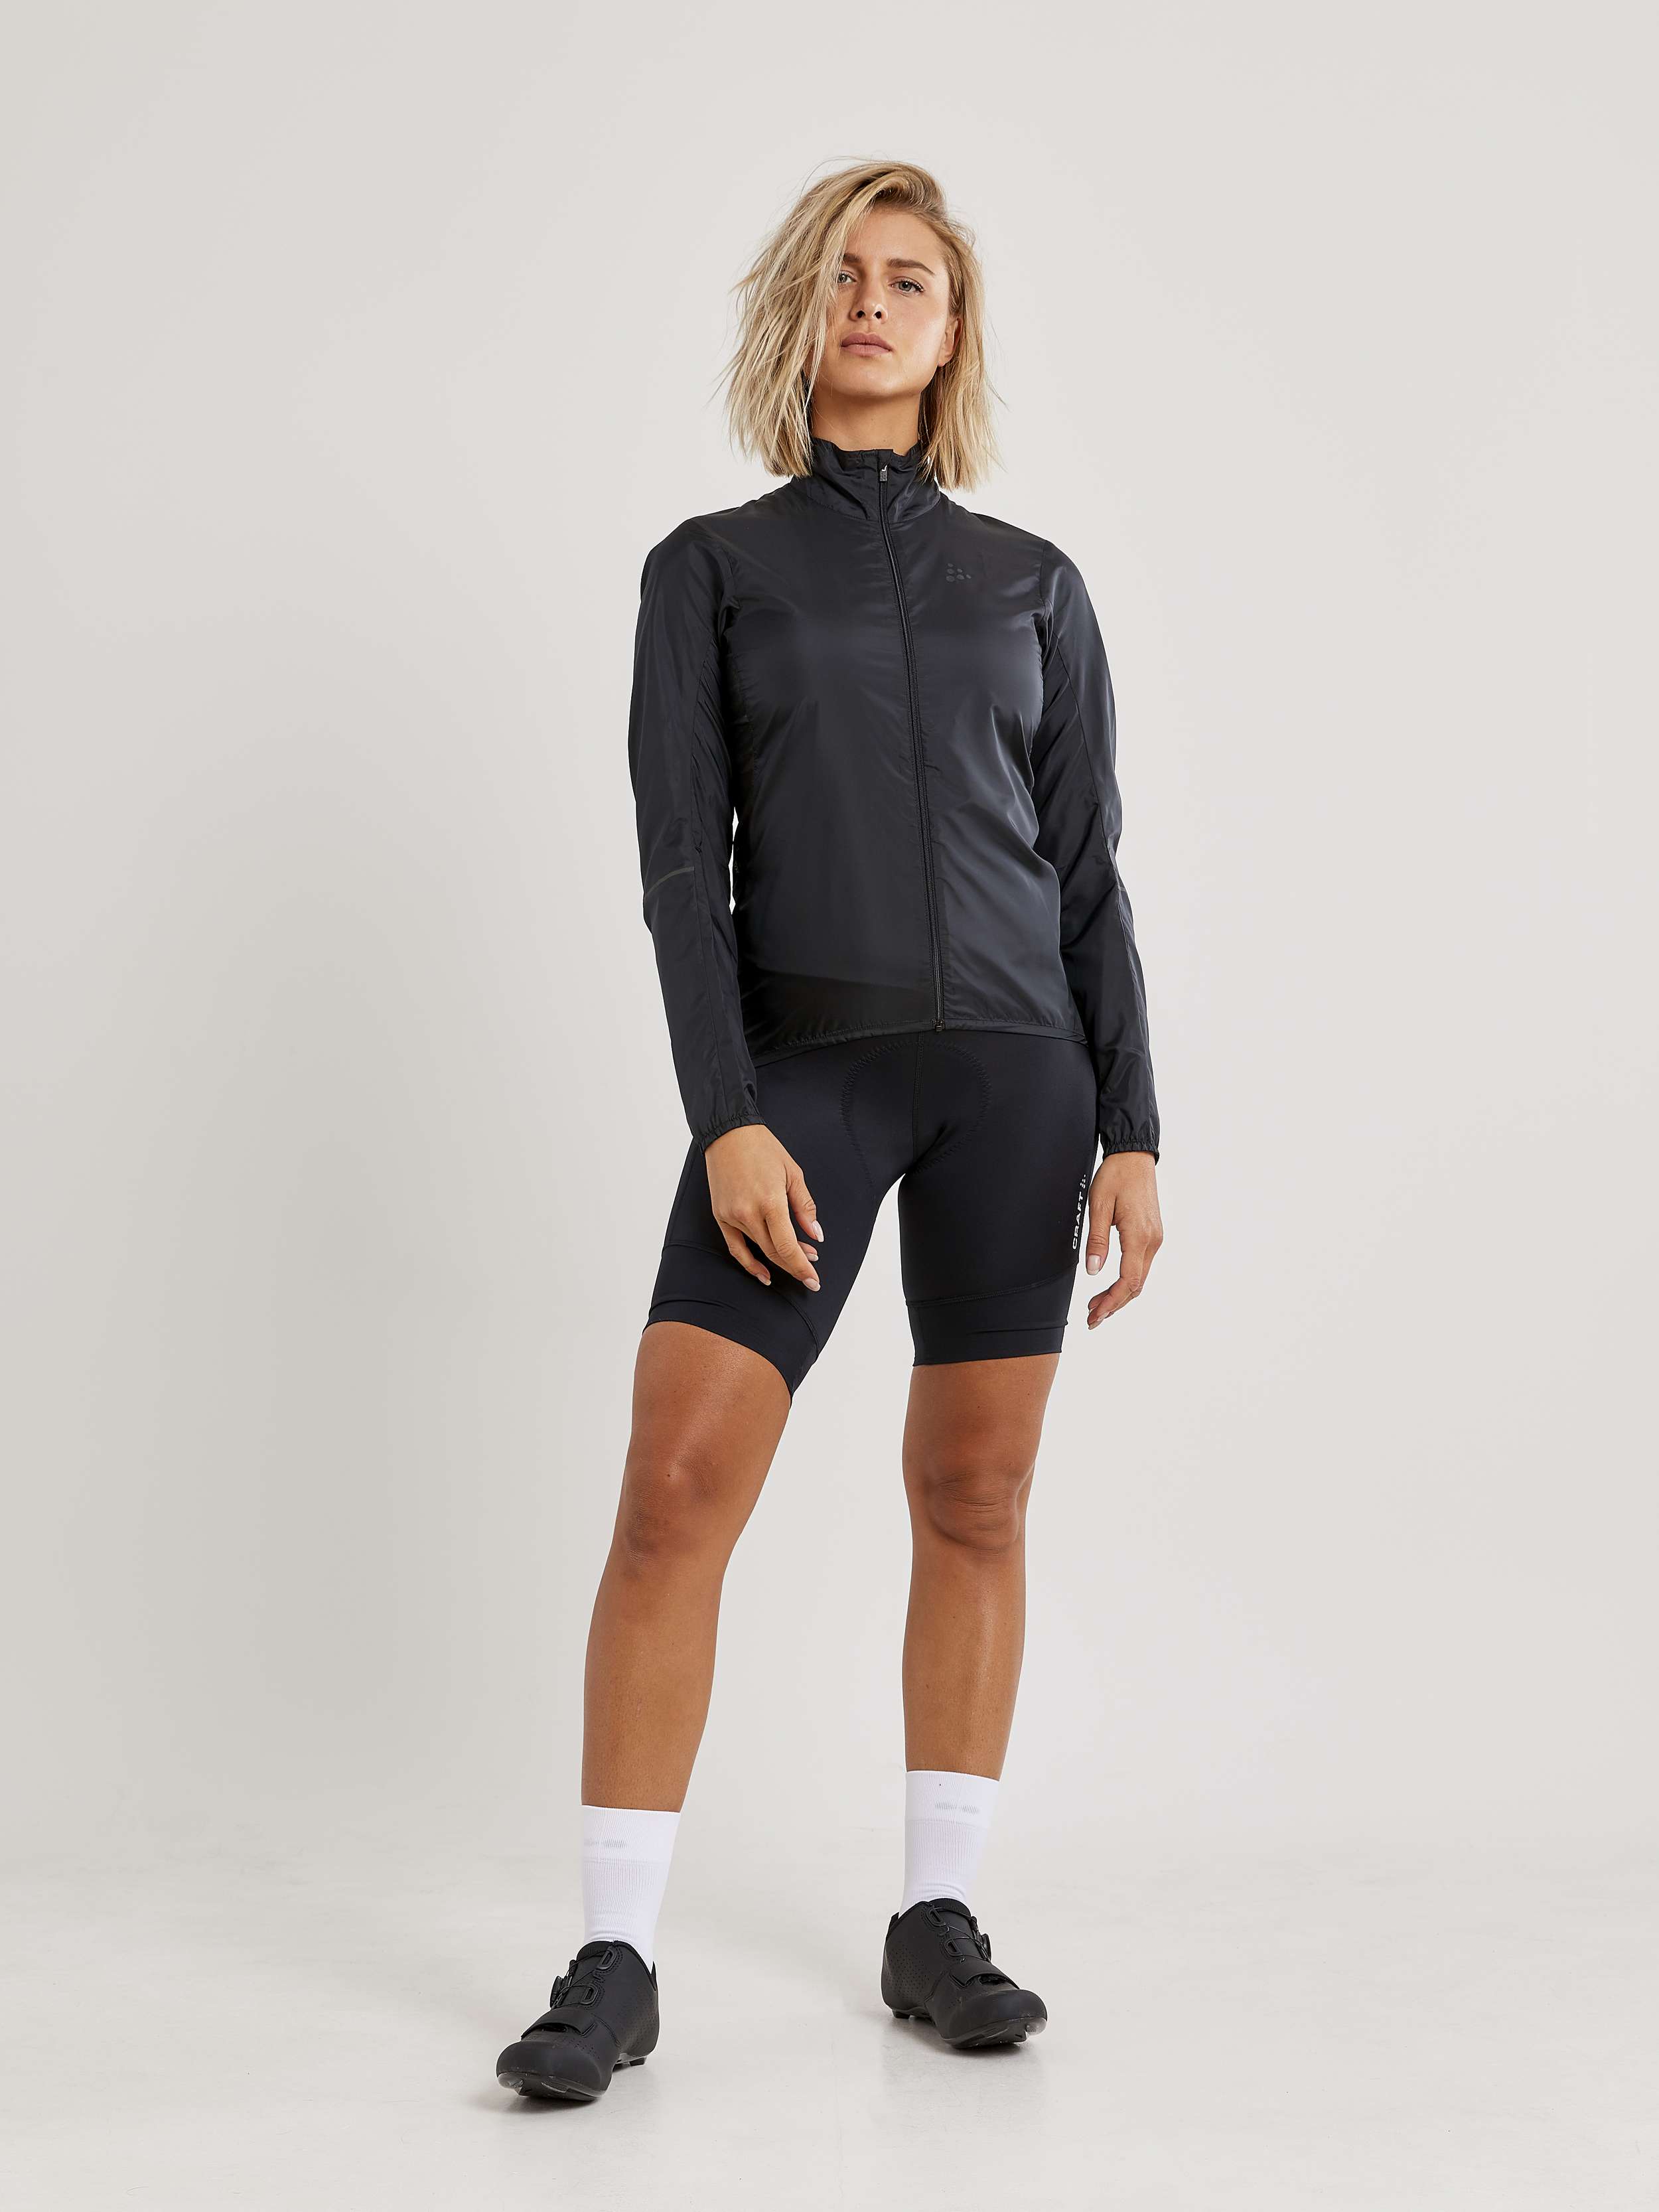 Essence Light Wind jkt W - Black | Craft Sportswear